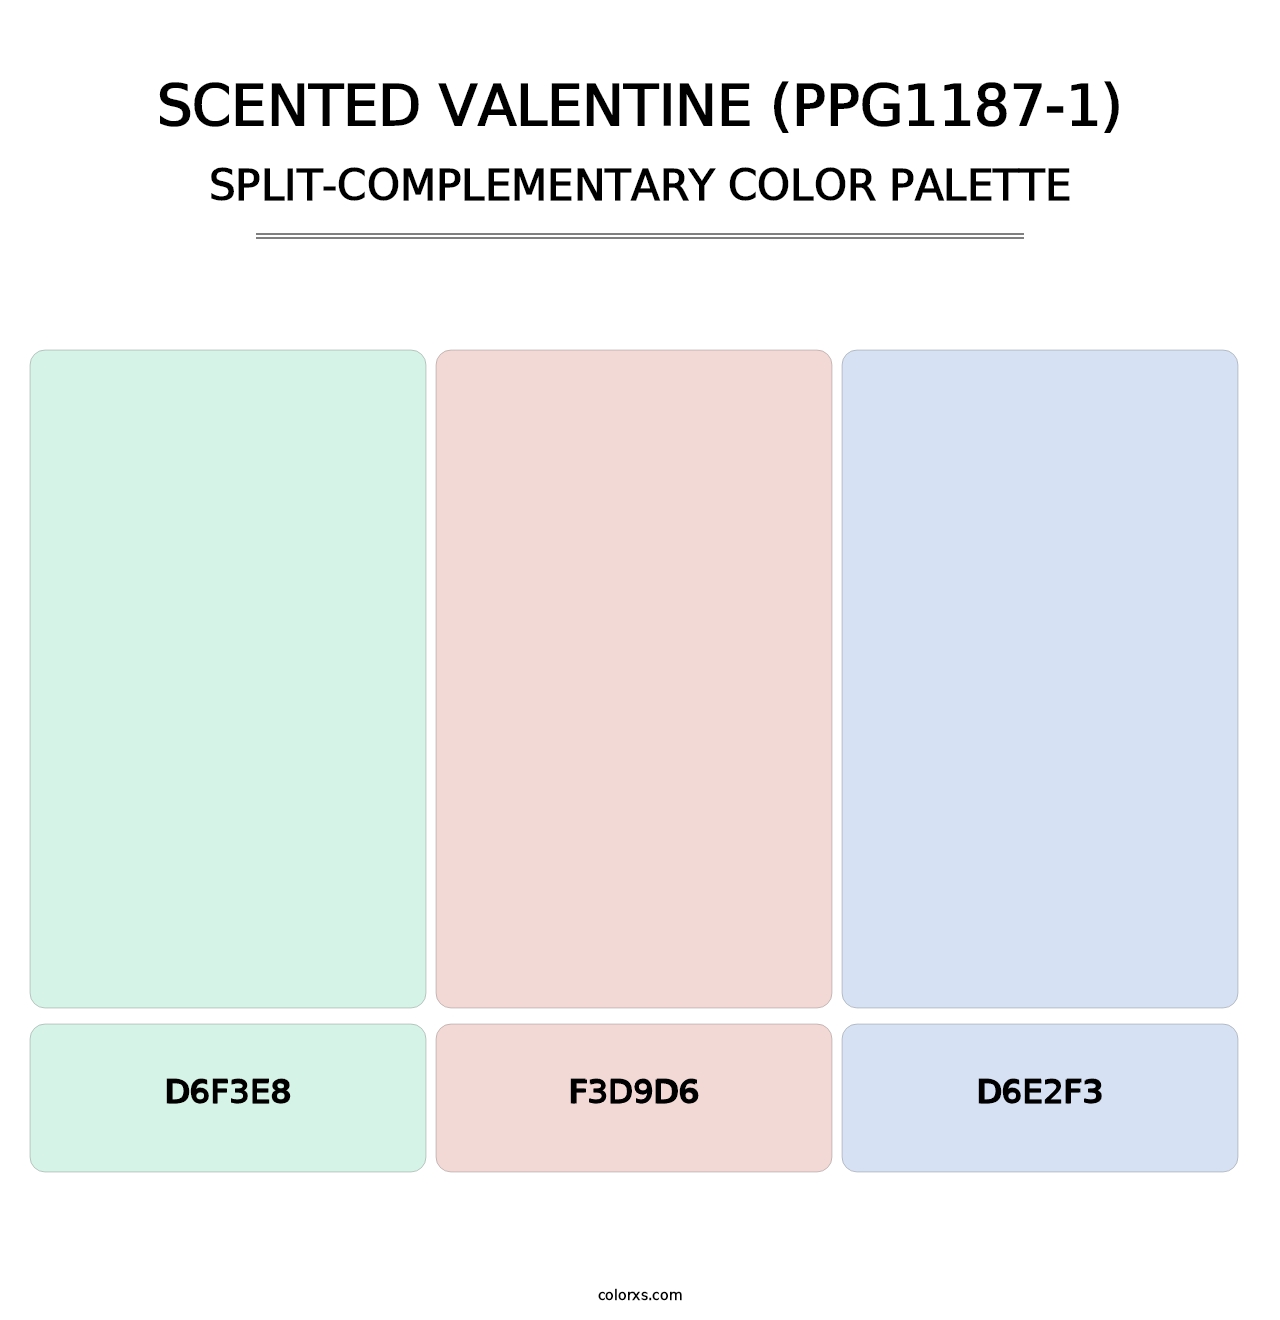 Scented Valentine (PPG1187-1) - Split-Complementary Color Palette